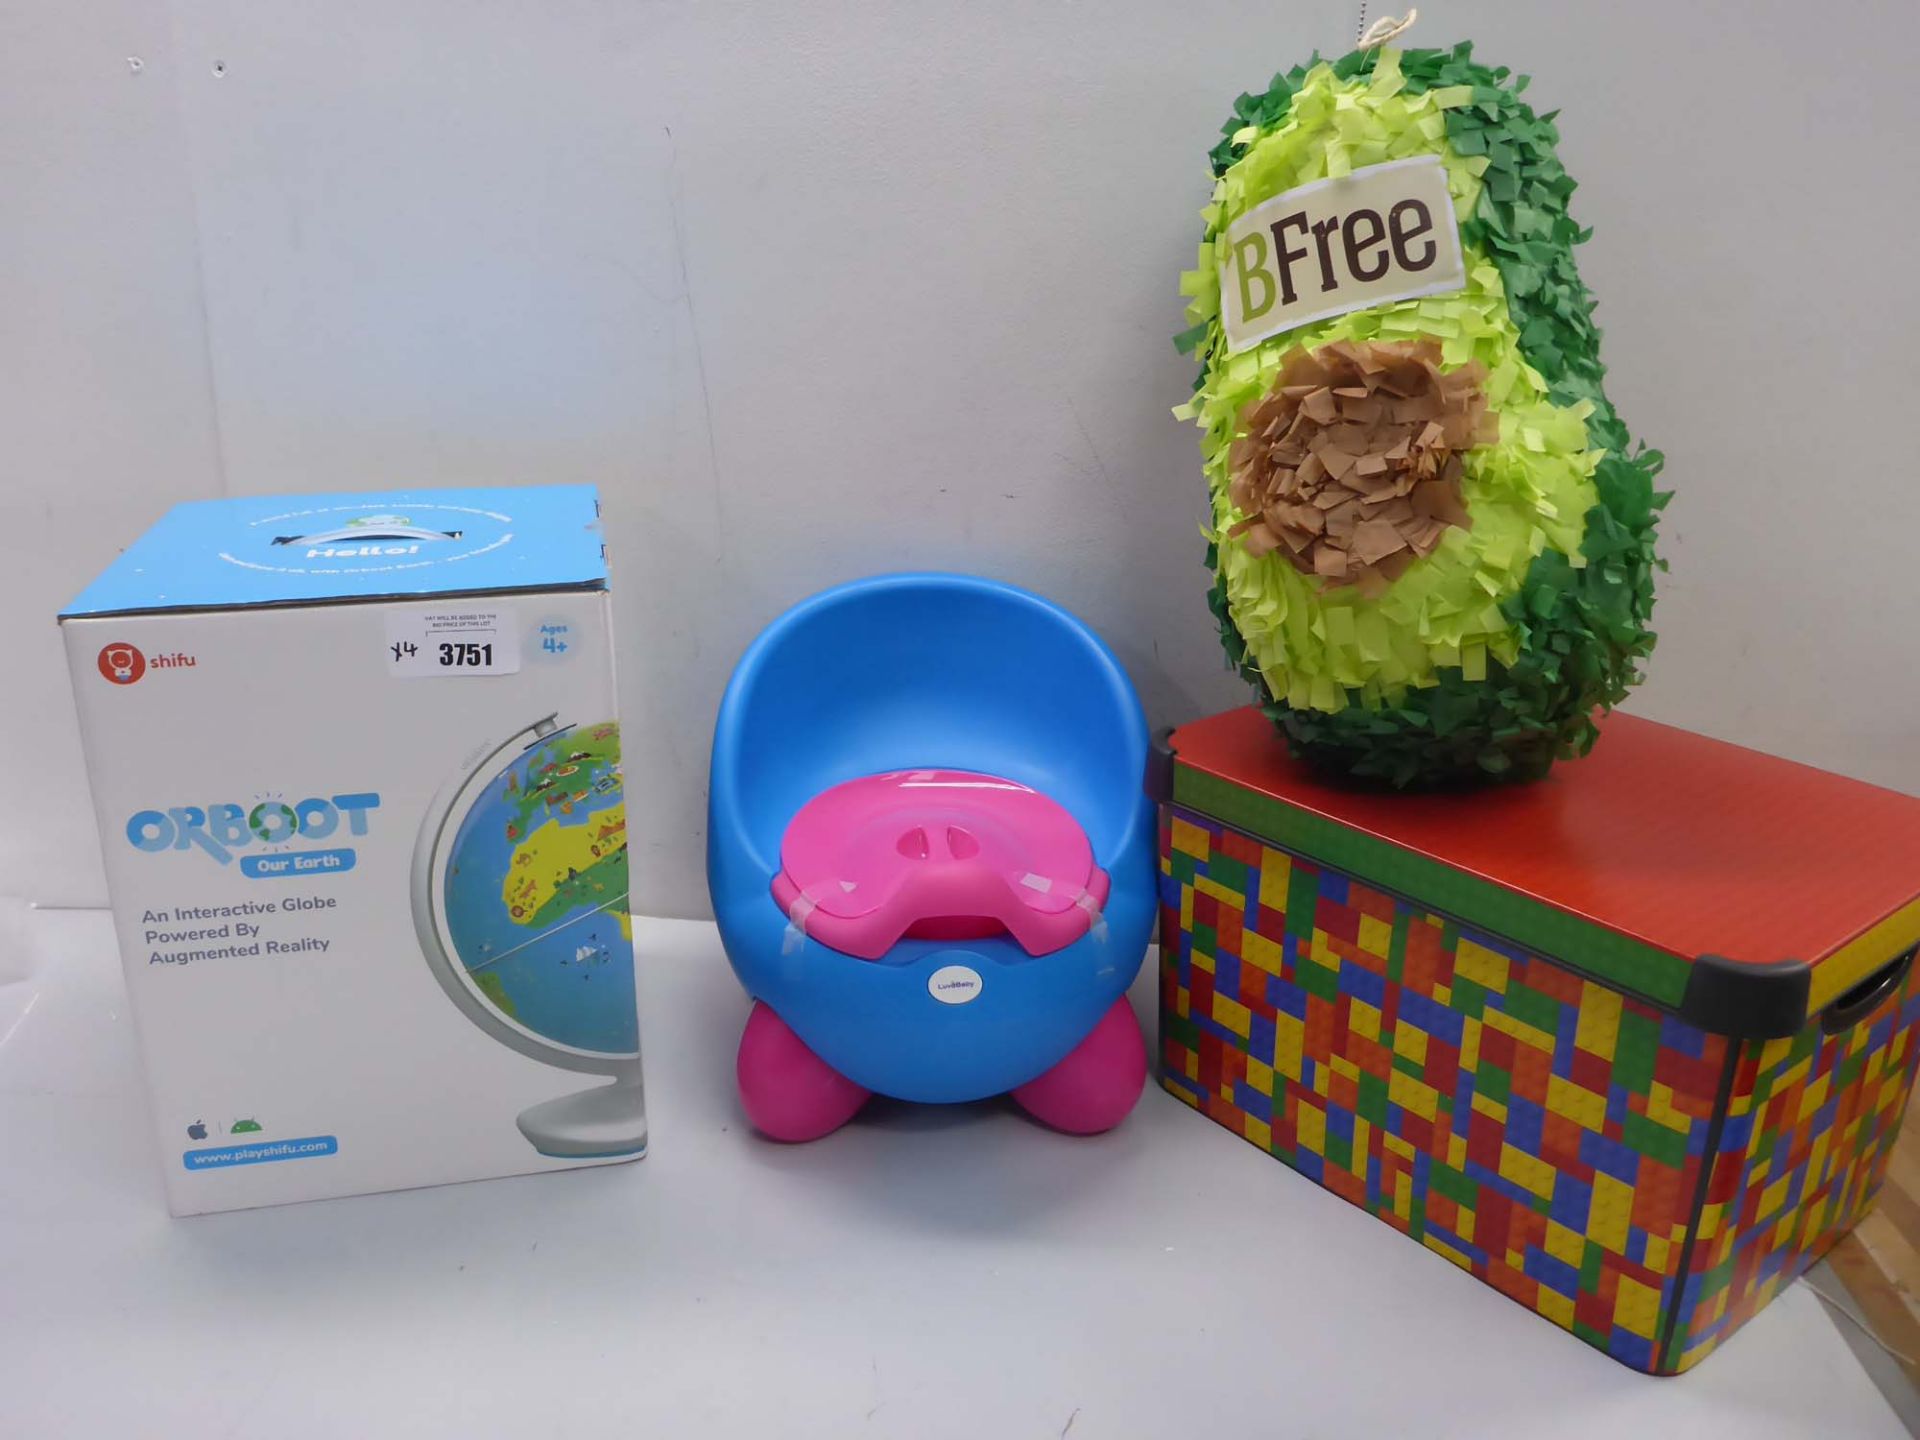 Shifu Orboot Our Earth globe, LuvDBaby potty, Avocardo pinata and toy storage box